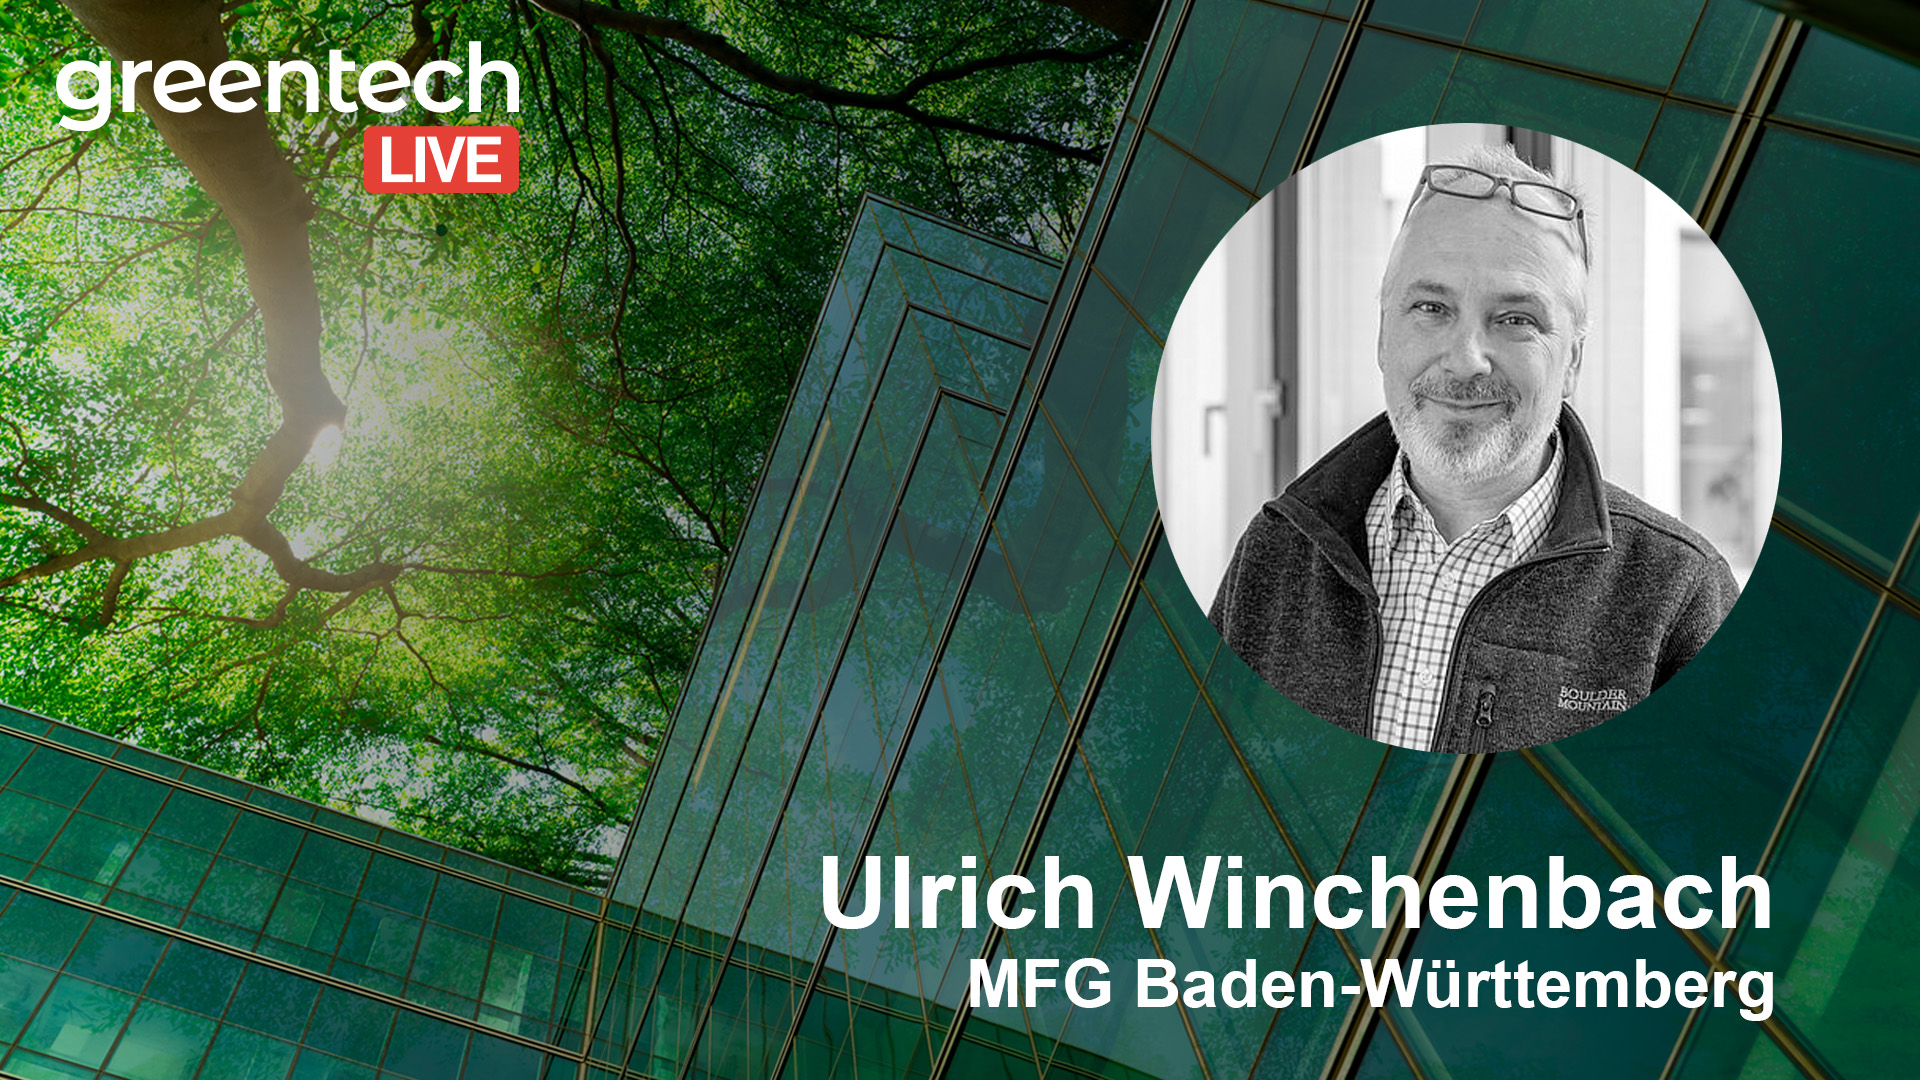 Greentech LIVE MFG Baden Wuerttembeerg Ulrich Winchenbach MfG Baden-Wuerttemberg Green Media